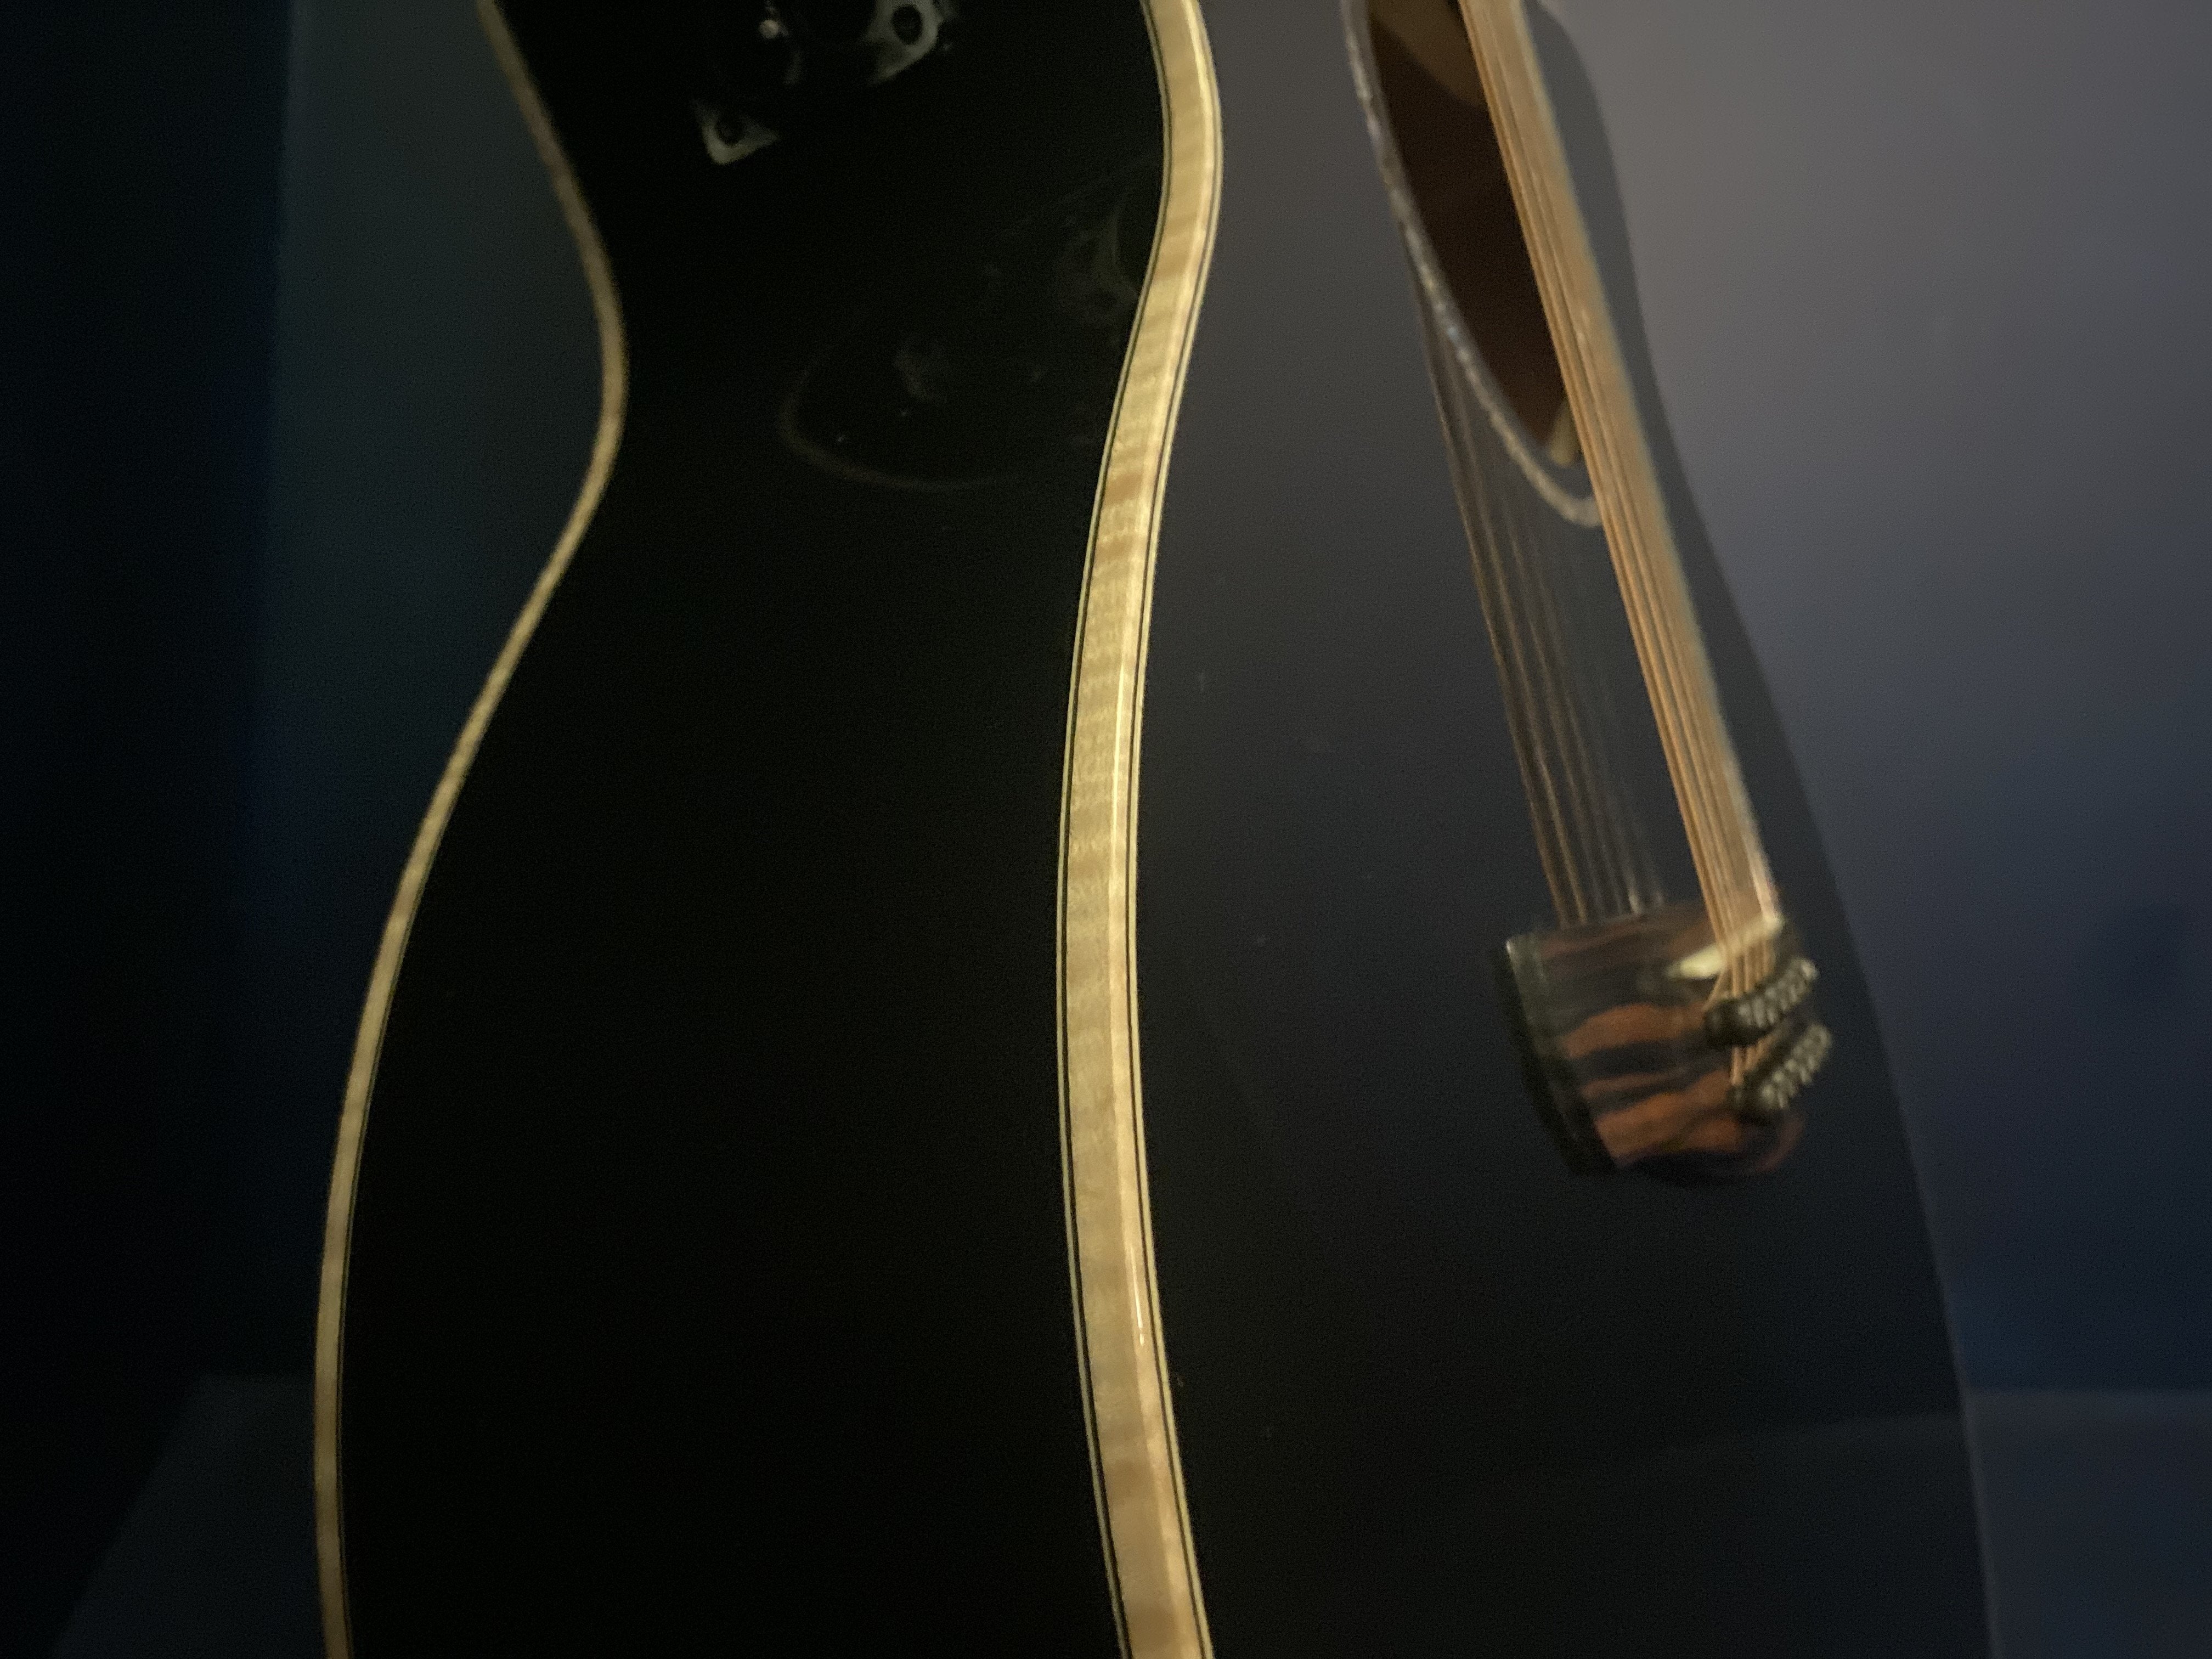 Faith FECV12 Electro Acoustic Guitar (Eclipse Venus12), Electro Acoustic Guitar for sale at Richards Guitars.